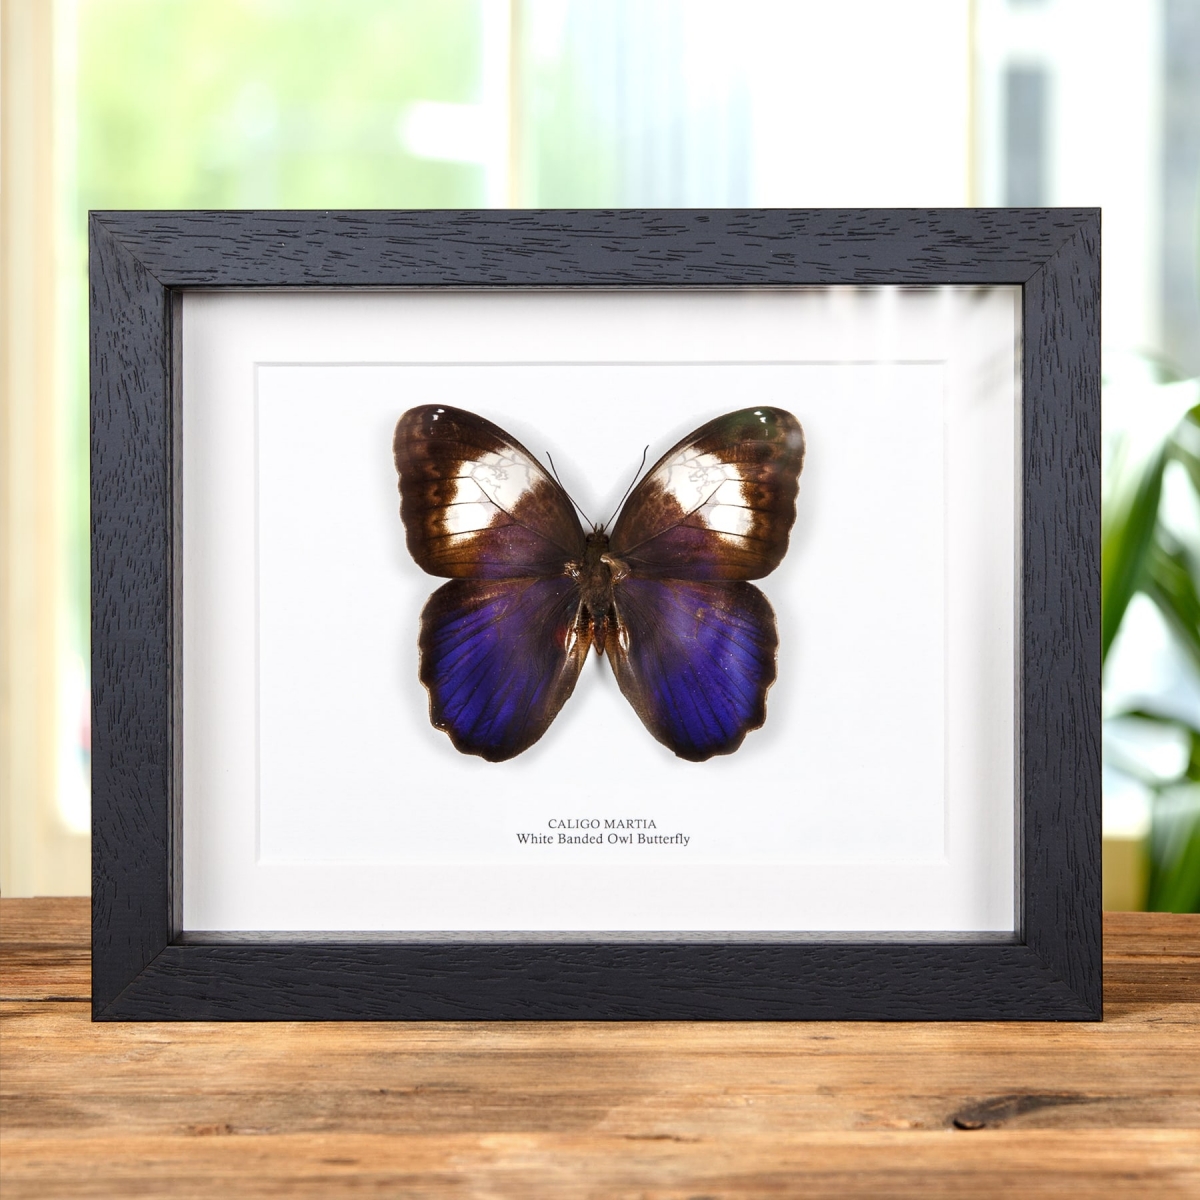 Minibeast White Banded Owl Butterfly In Box Frame (Caligo martia)